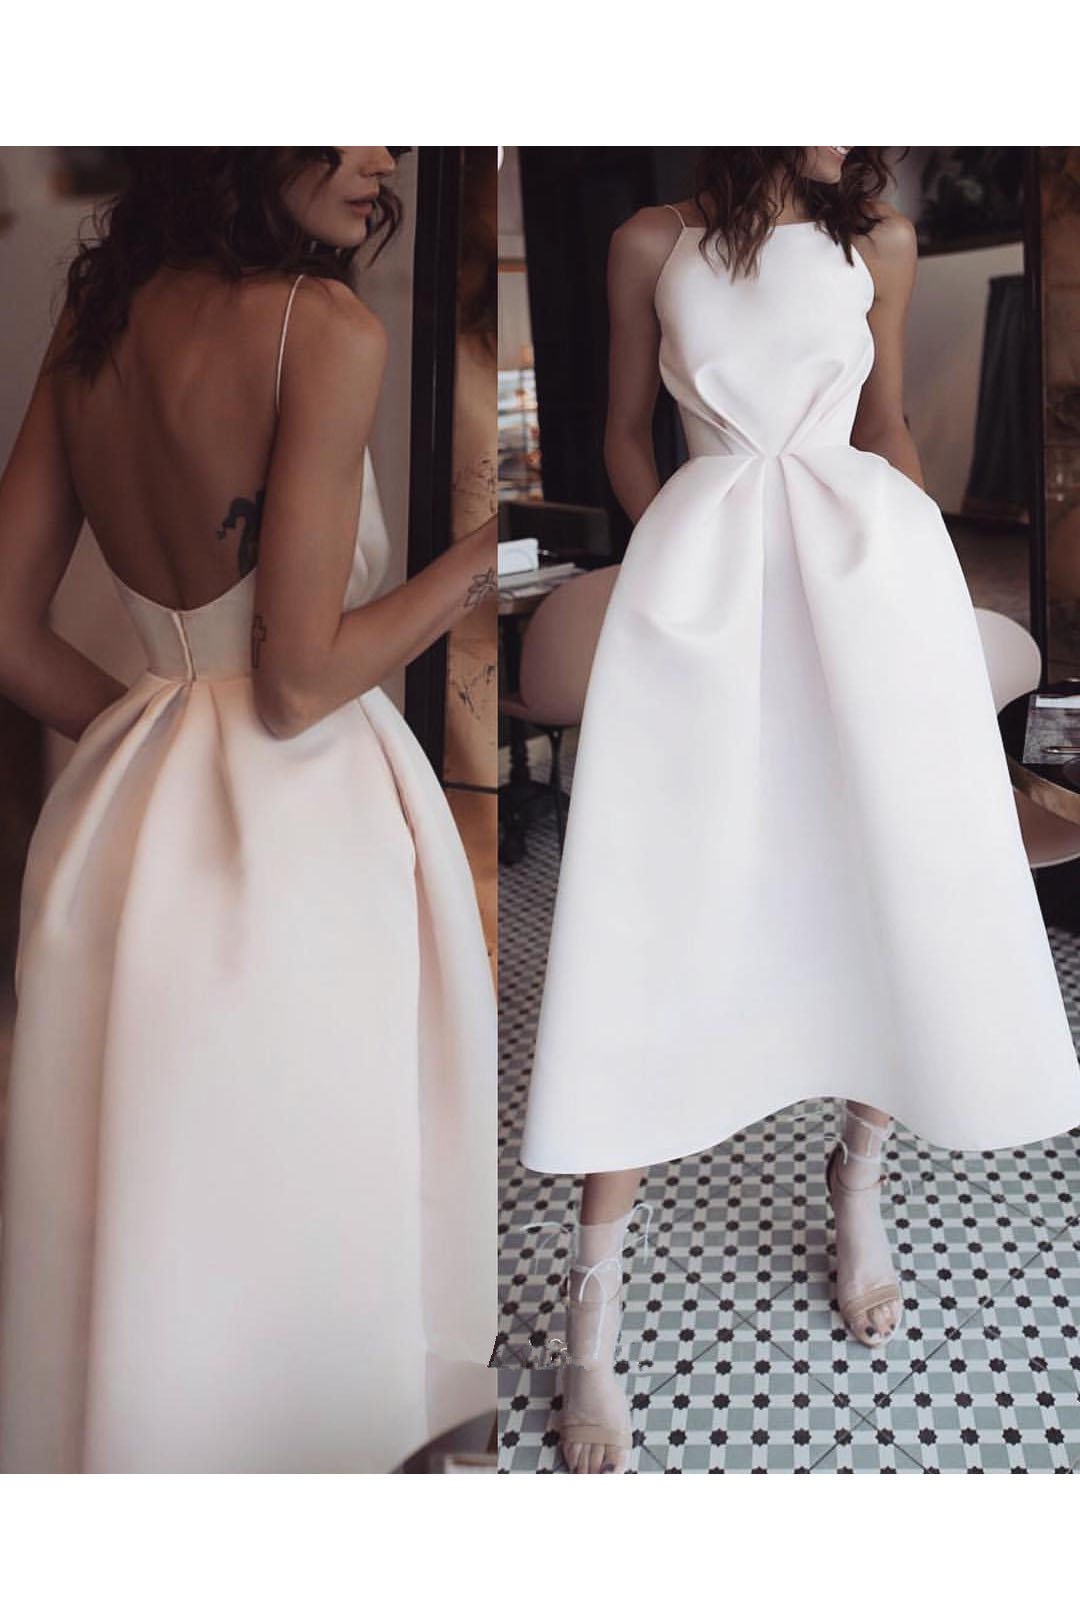 White Unique Tea Length Satin Party Dress, Spaghetti Straps Backless Prom Dress N2531